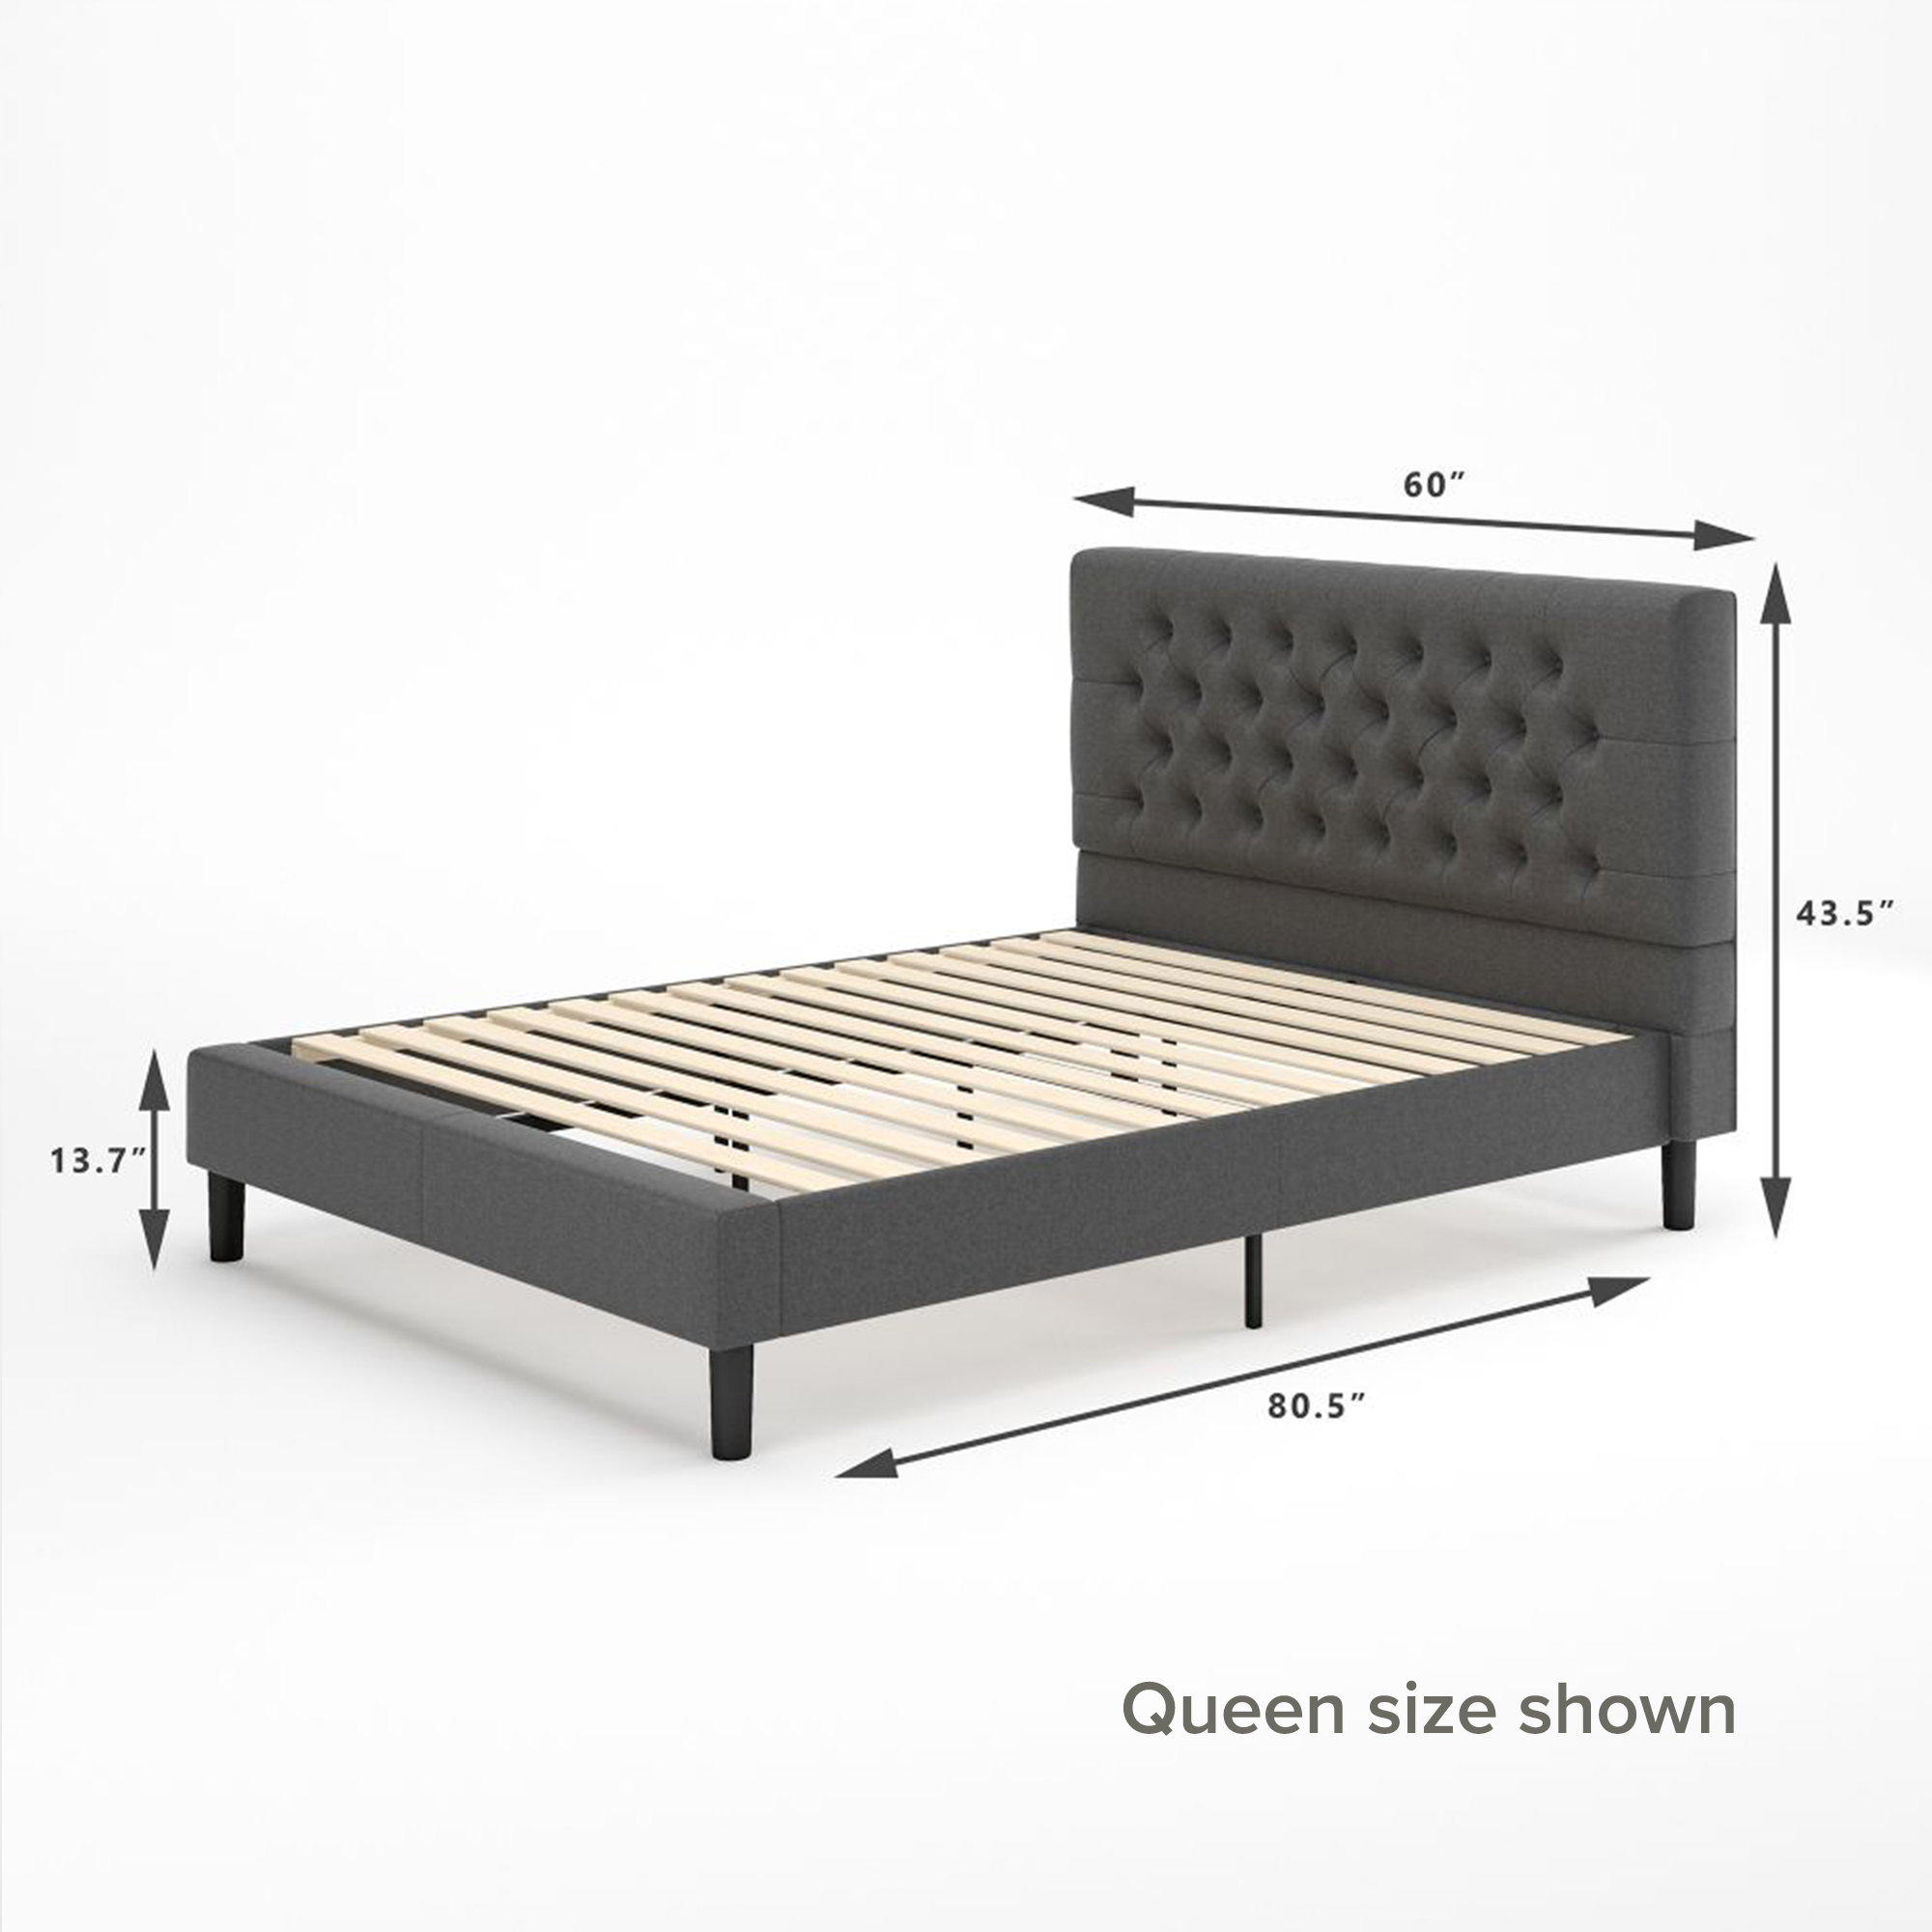 Misty upholstered Platform bed frame grey queen size dimensions shown